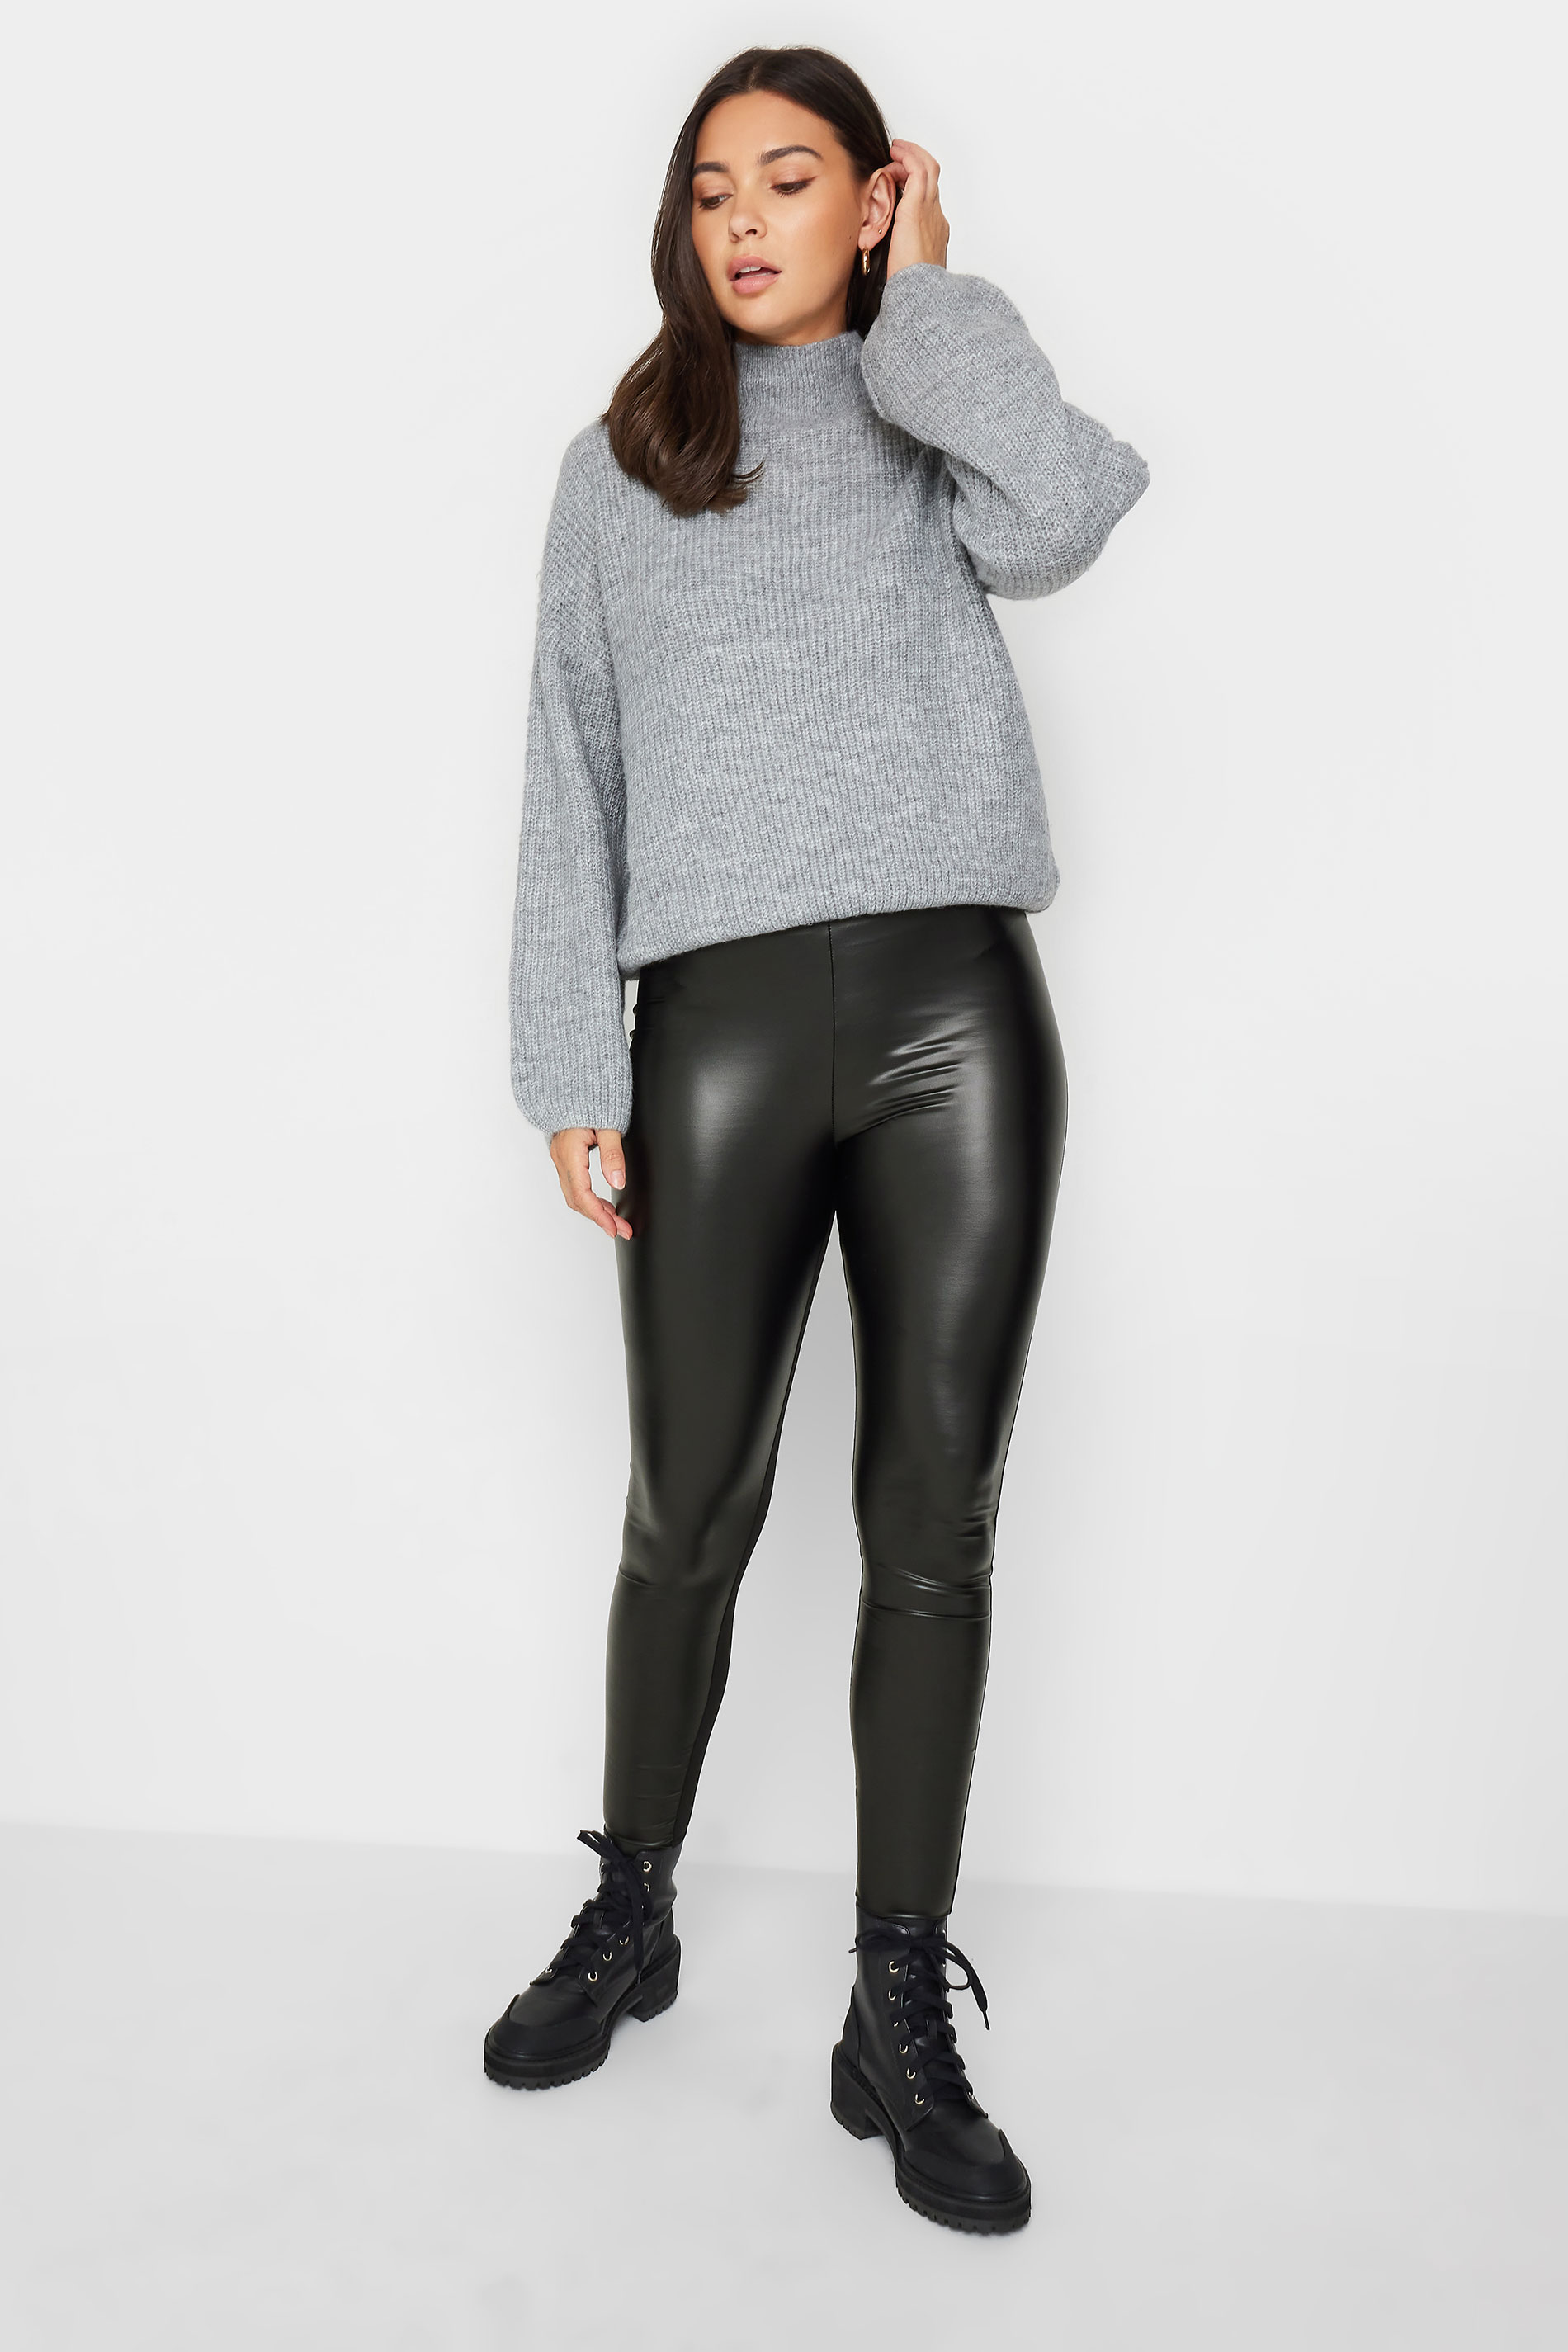 LTS Tall Women's Black Leather Look Leggings | Long Tall Sally 2